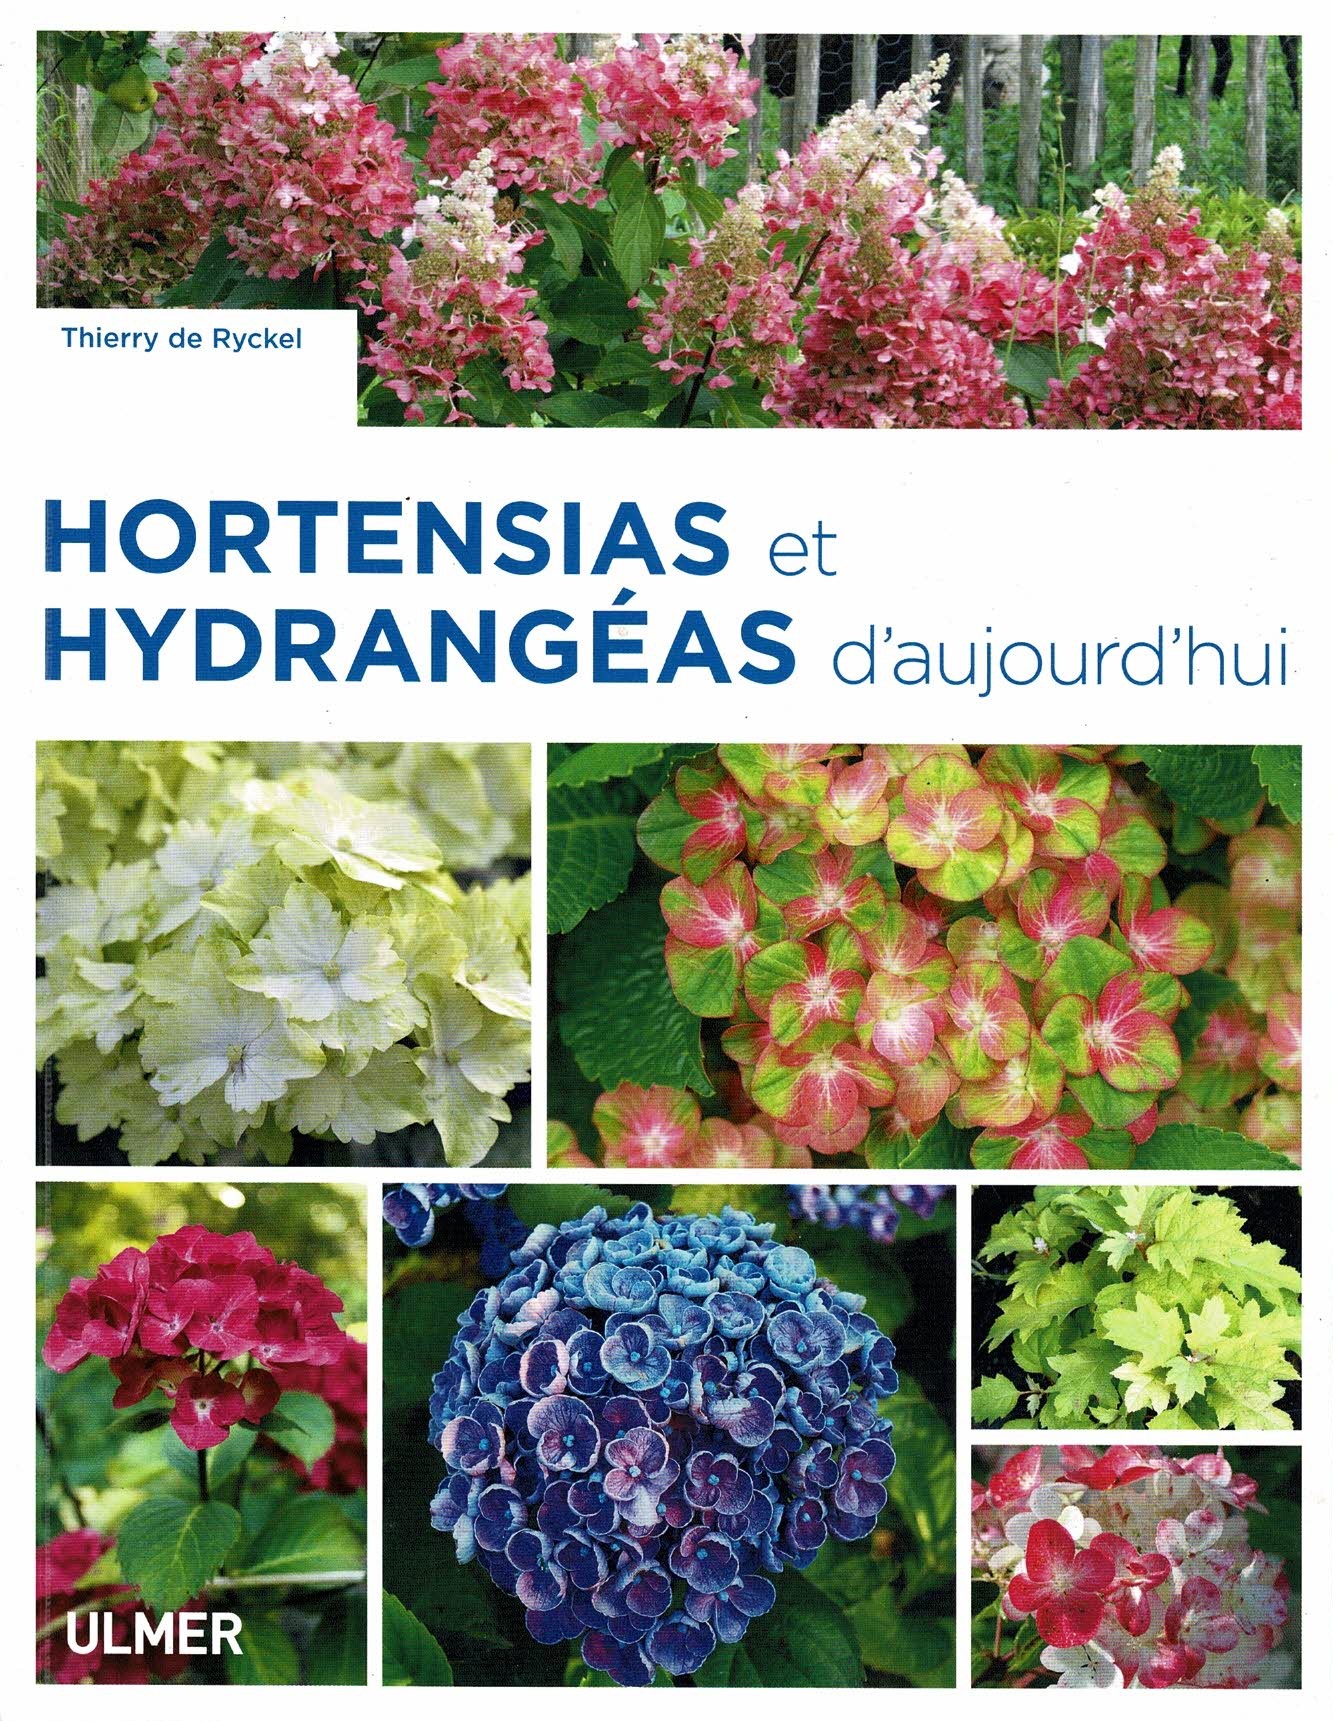 « Hortensias et hydrangeas d’aujourdhui » éd. Ulmer